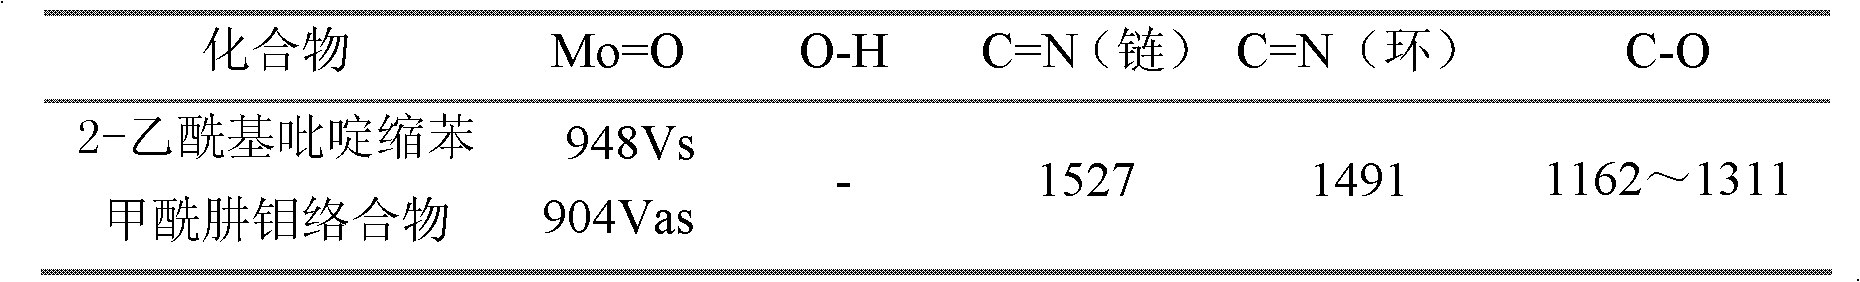 2-acetylpyridine benzoyl hydrazine molybdenum complex and preparation method thereof